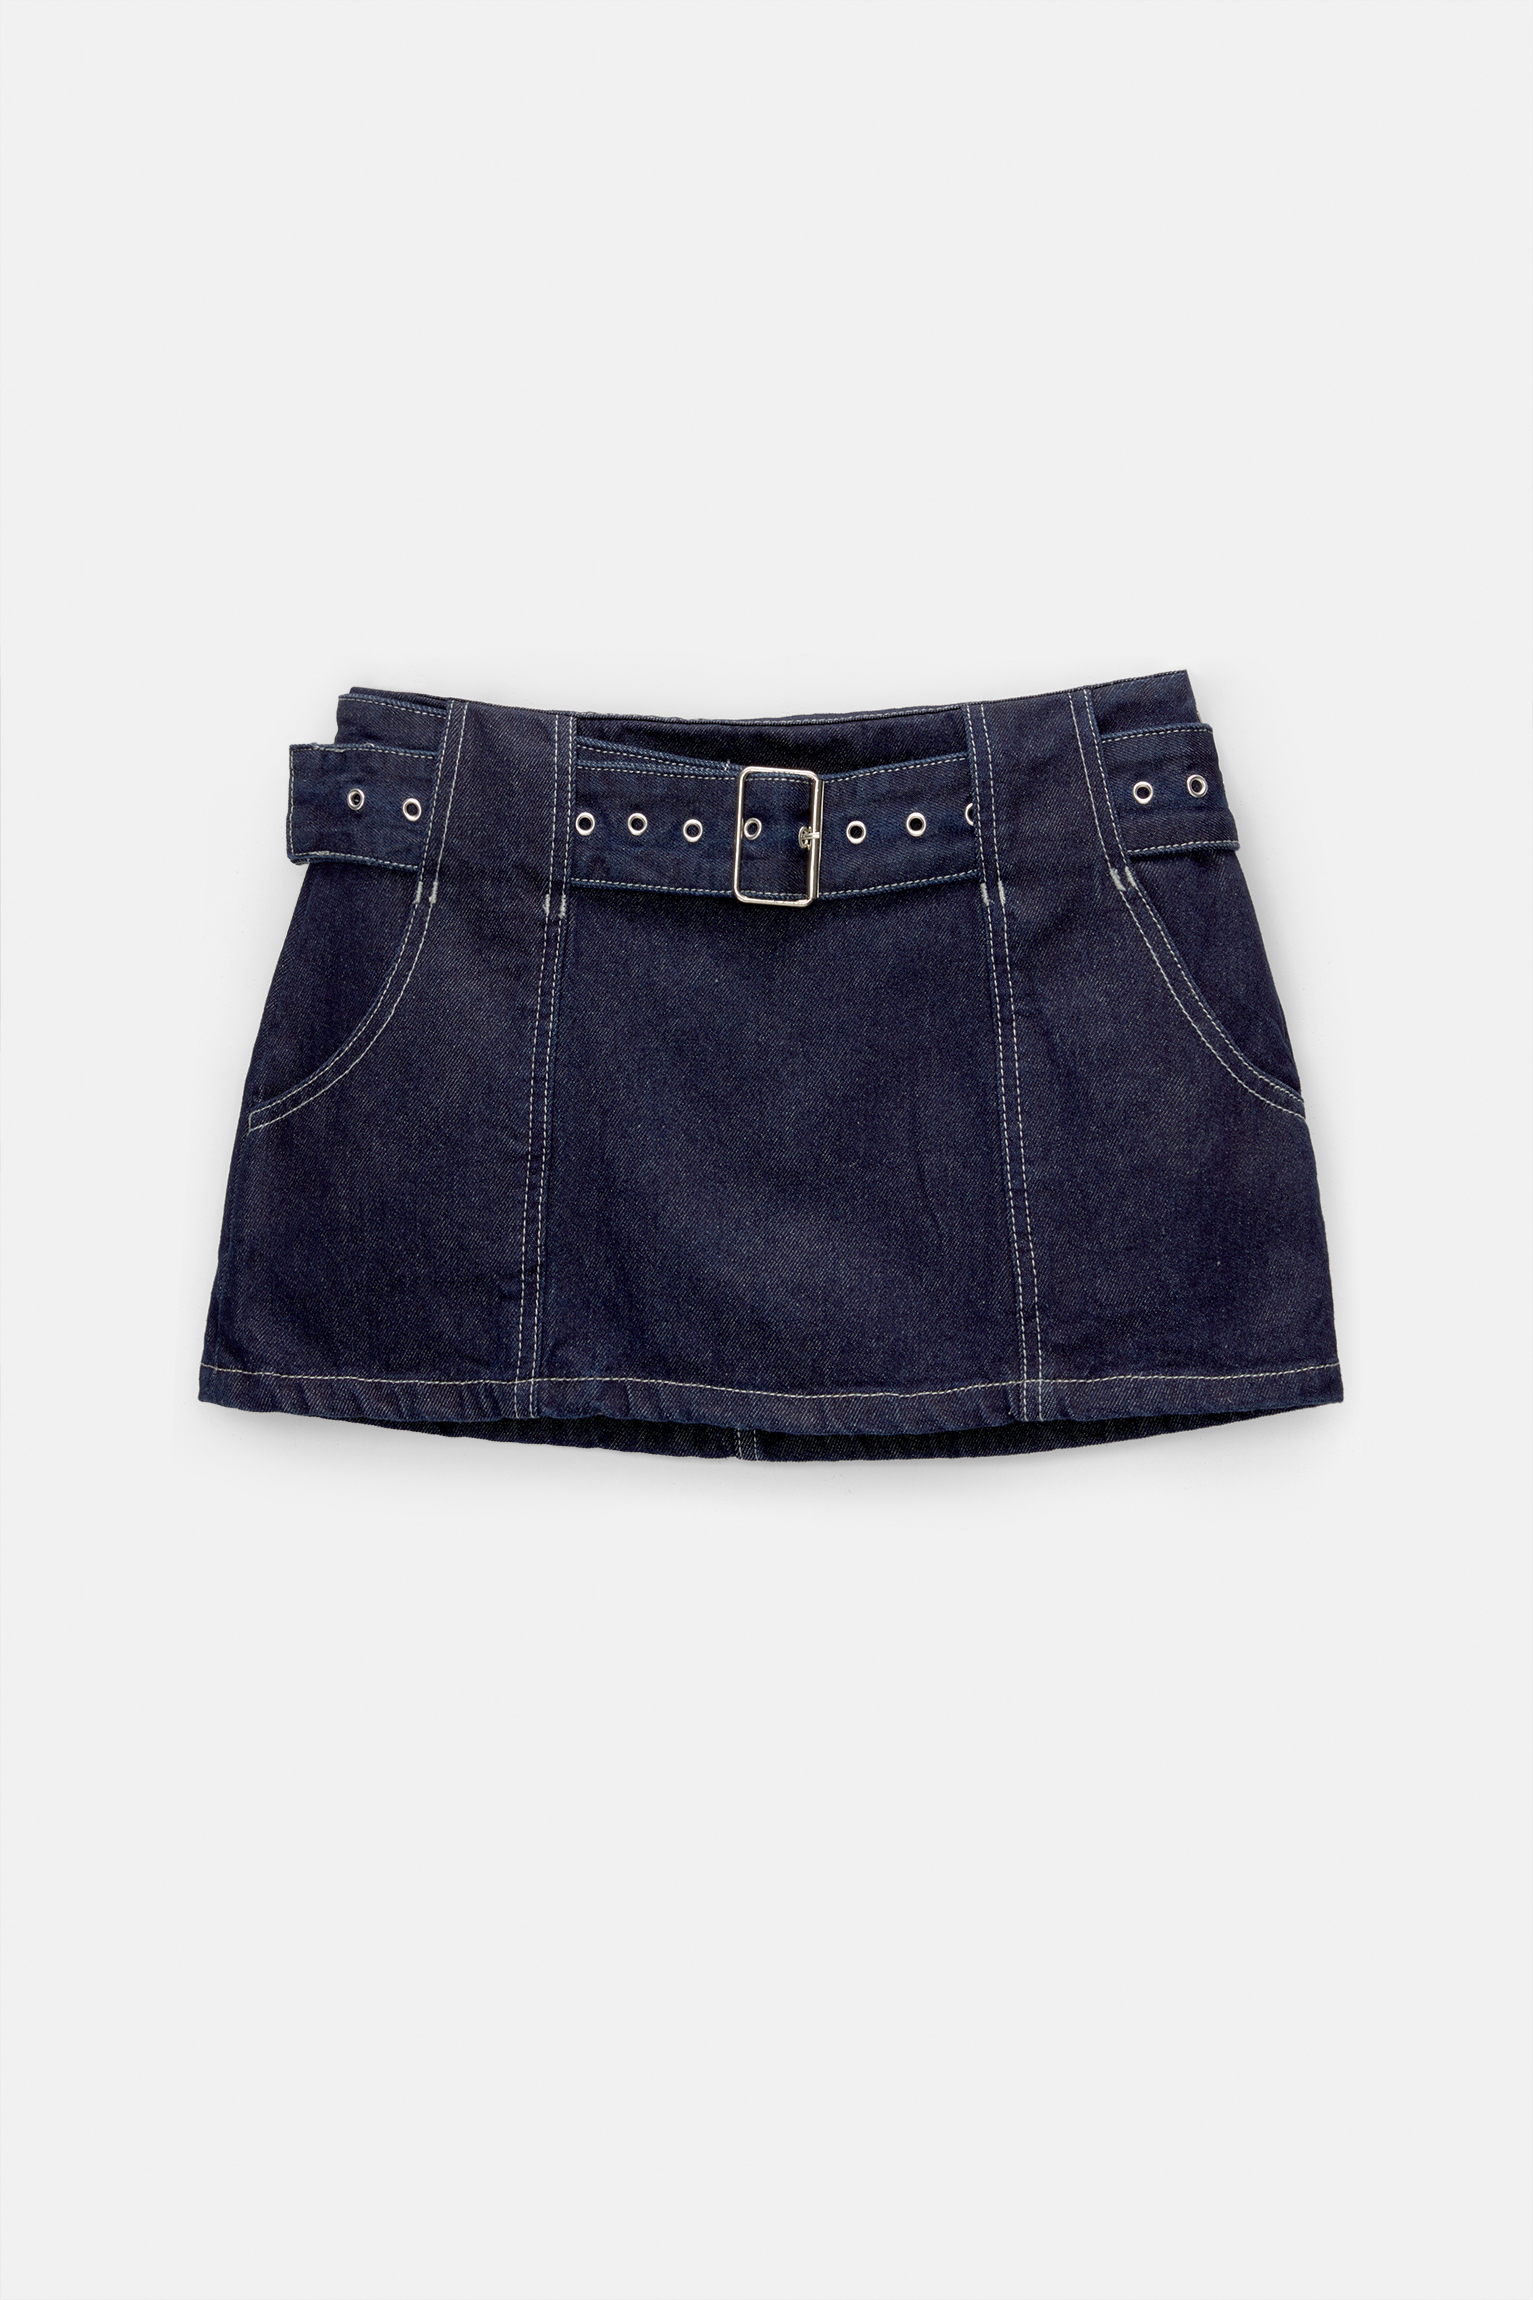 Denim mini skirt with seam details and belt - pull&bear